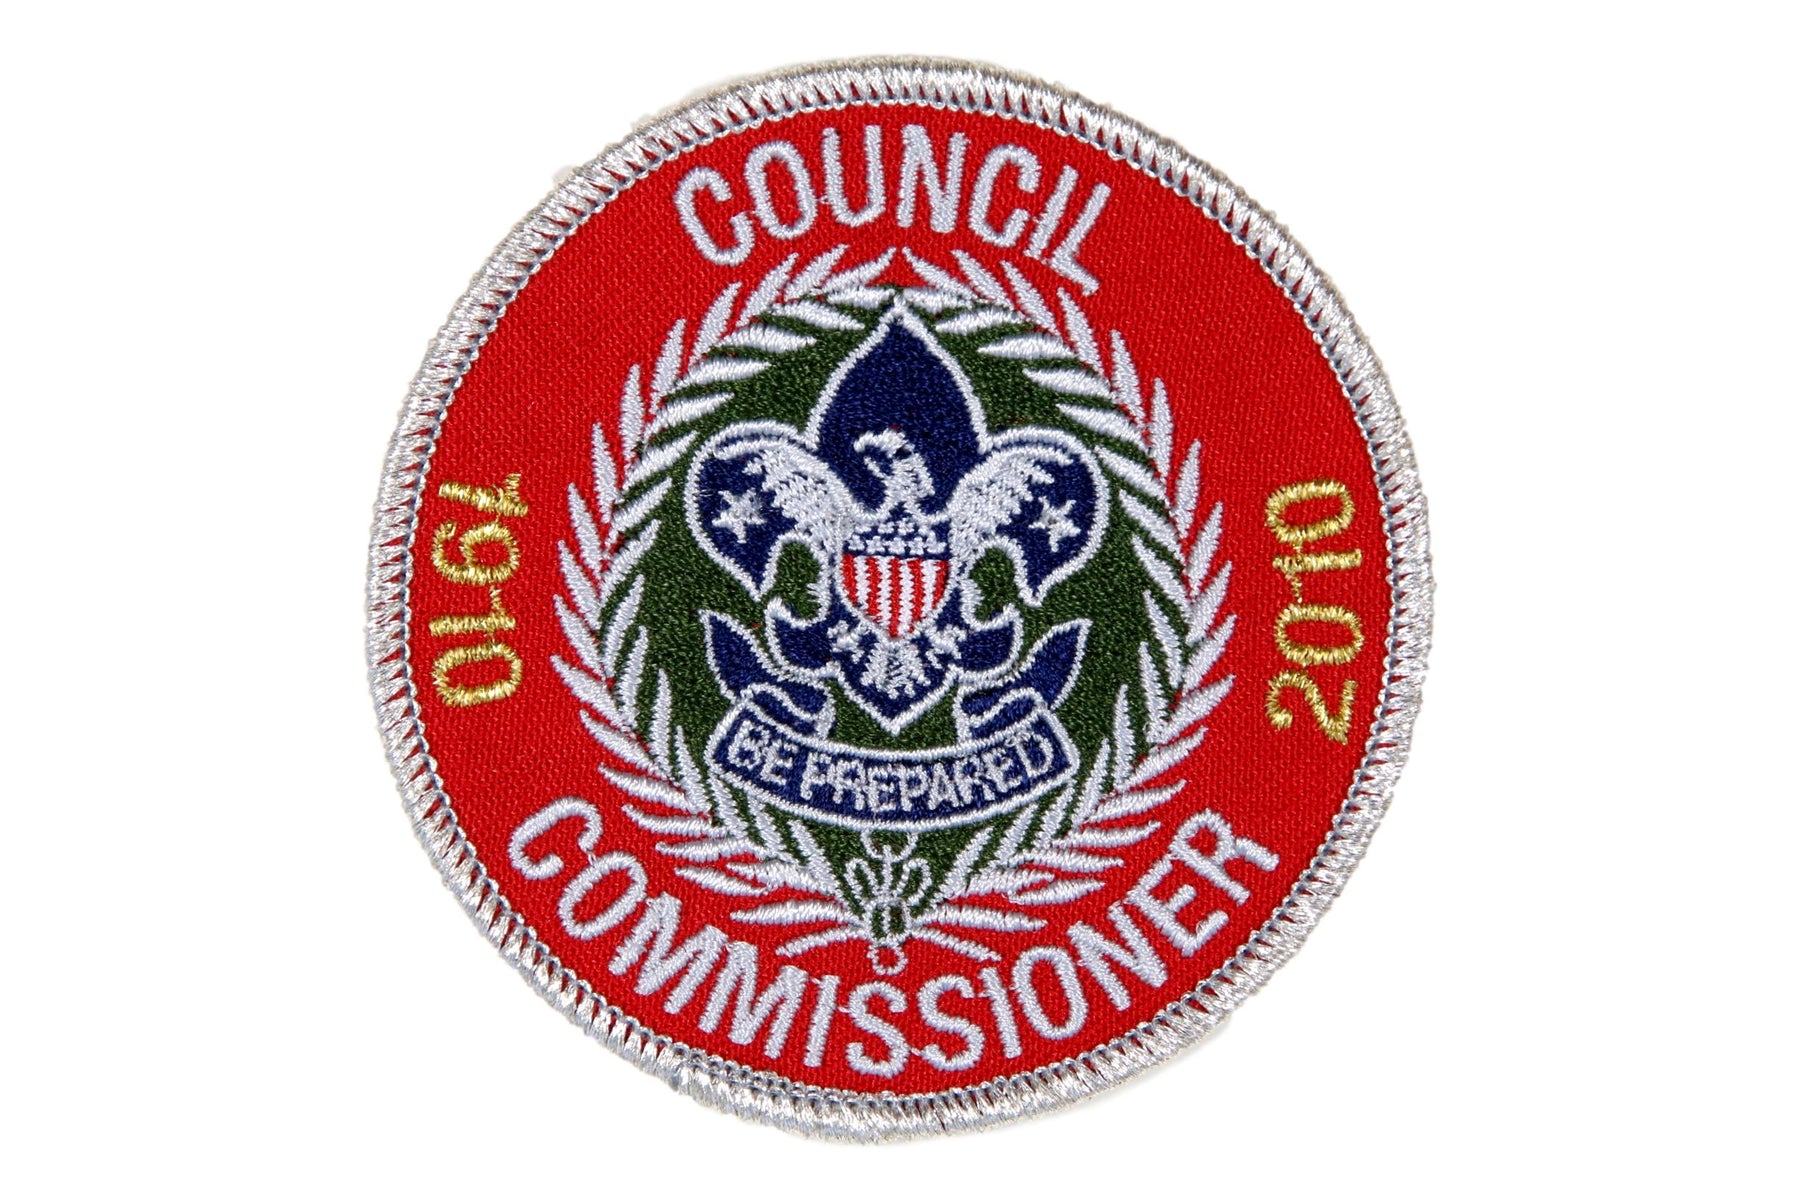 council-commissioner-patch-2010-bsa-back-eagle-peak-store